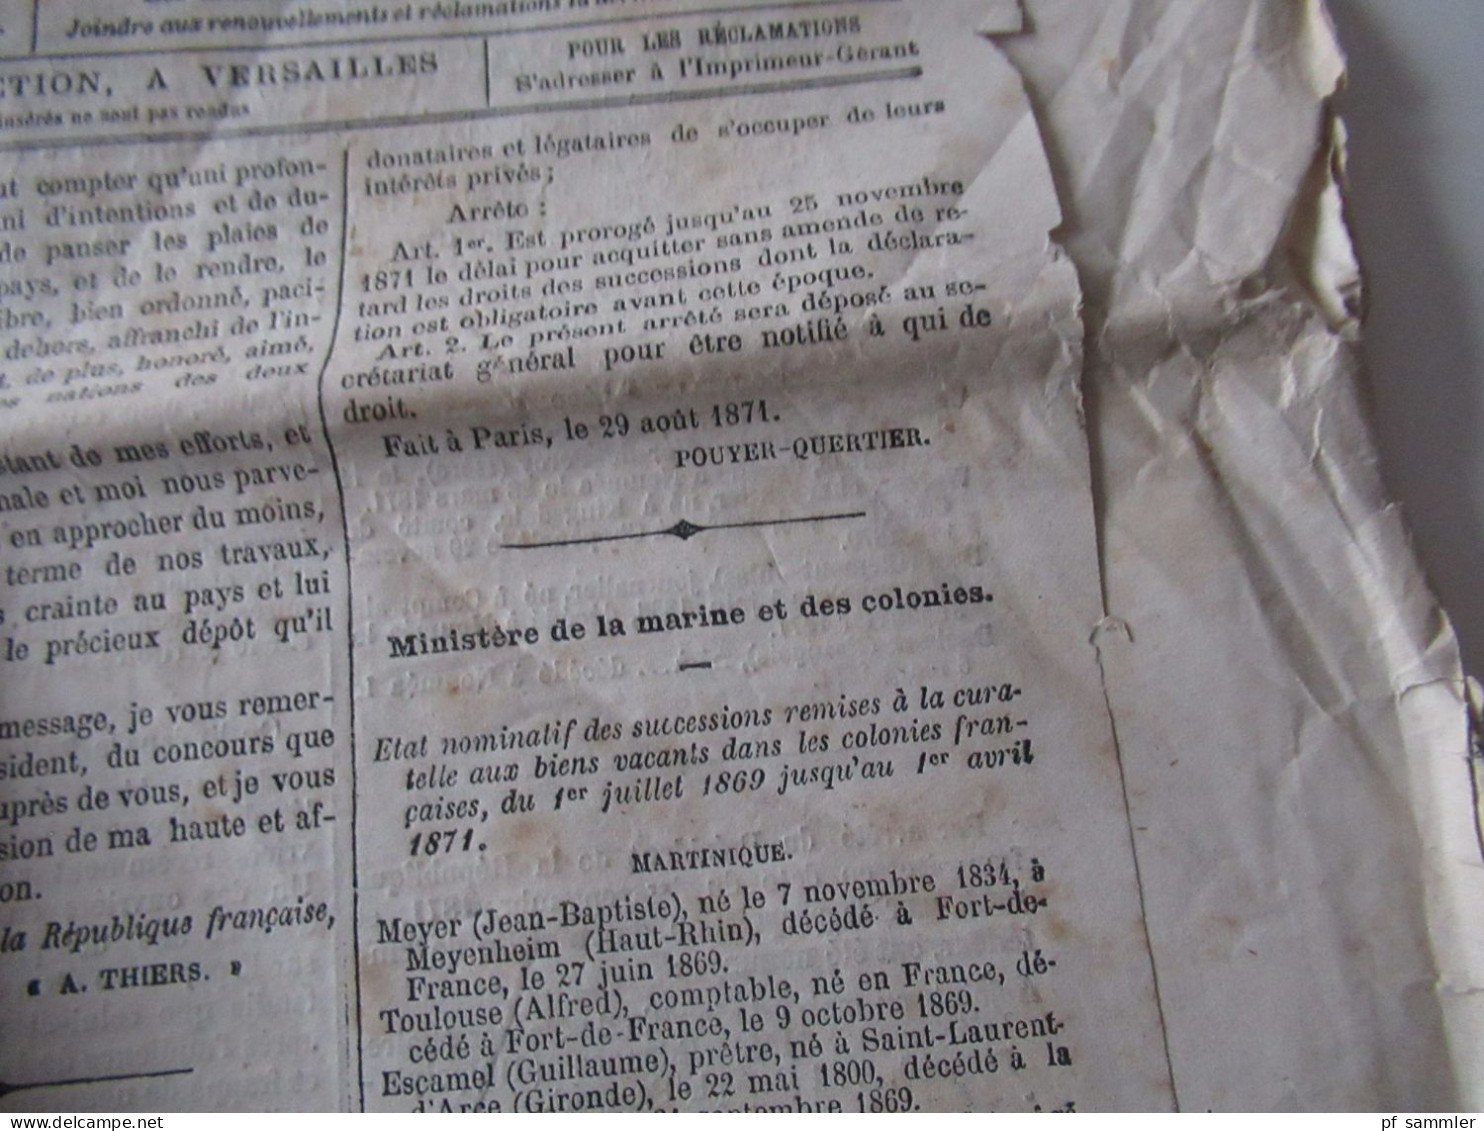 Guerre 1870 Deutsch-Französischer Krieg 5 Zeitungen Journal Officiel de la Republique Francaise August u. September 1871